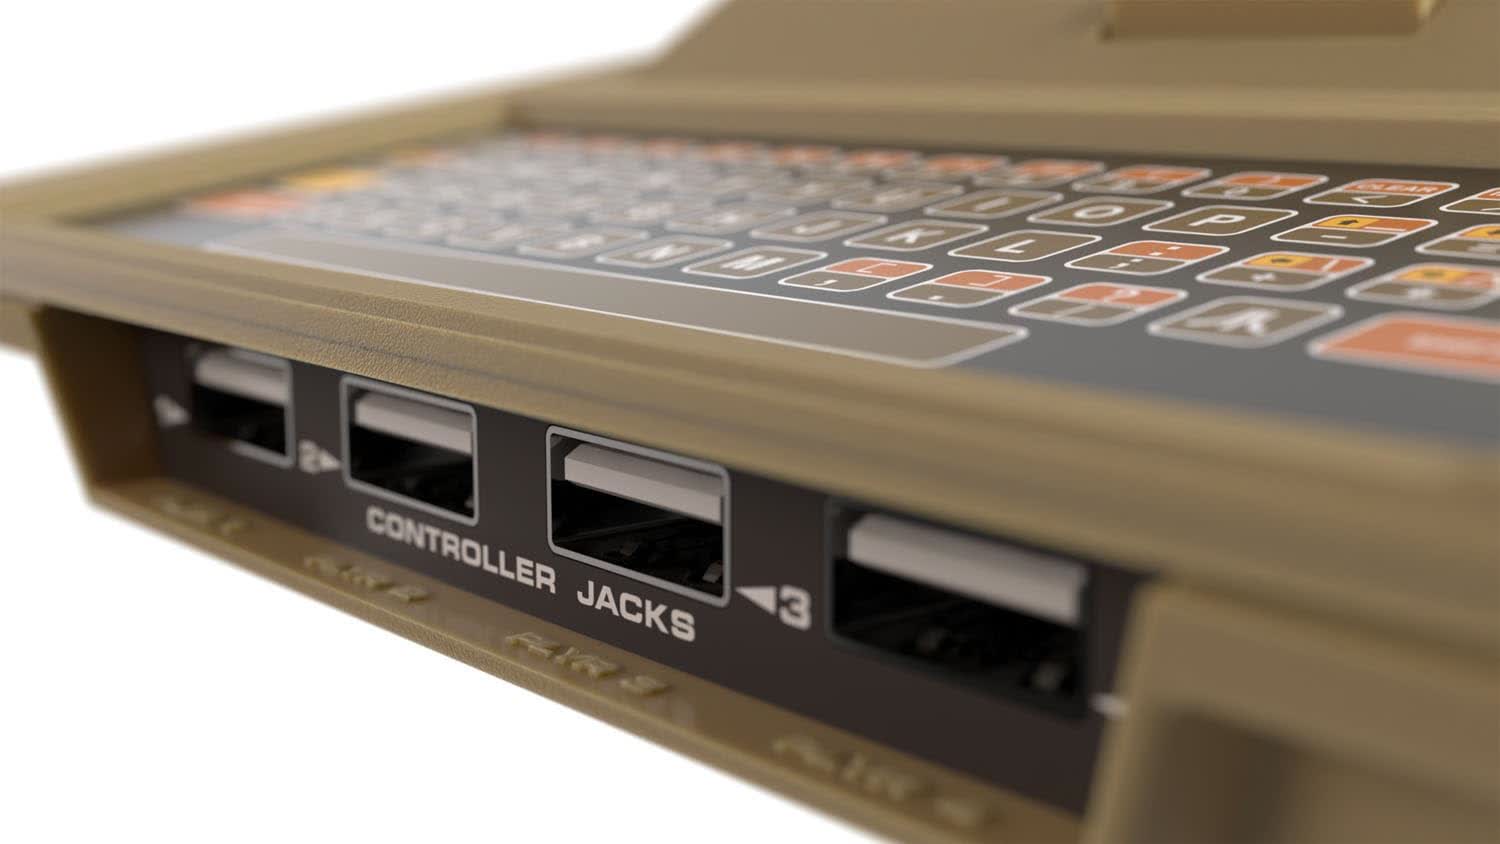 Meet the Atari 400, the newest mini console on the block